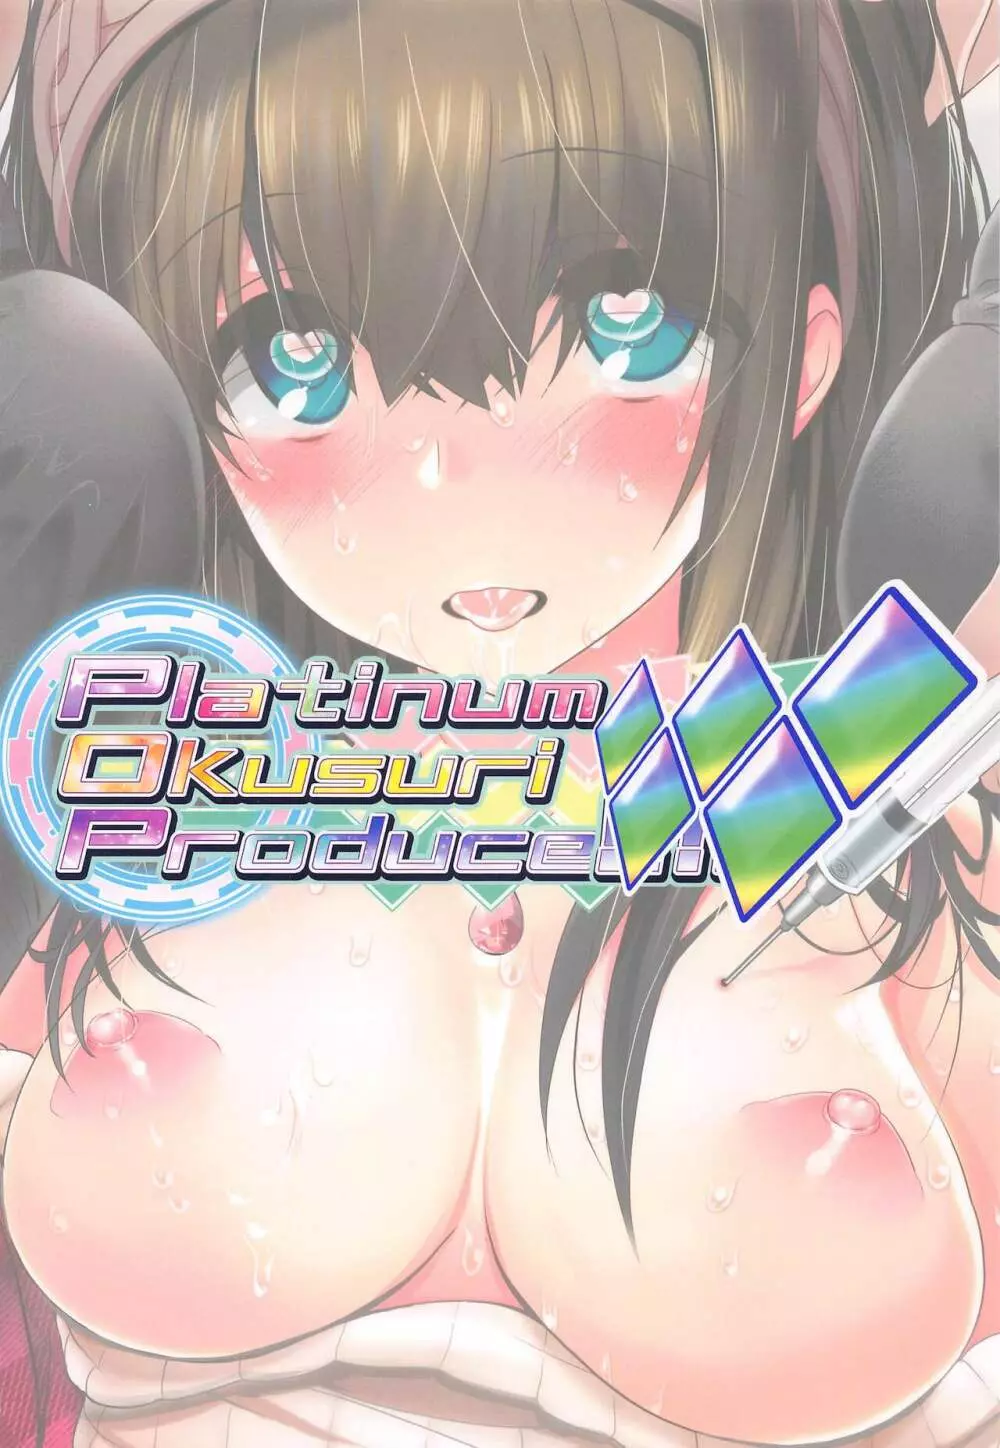 Platinum Okusuri Produce!!!! ◇◇◇◇◇ 18ページ